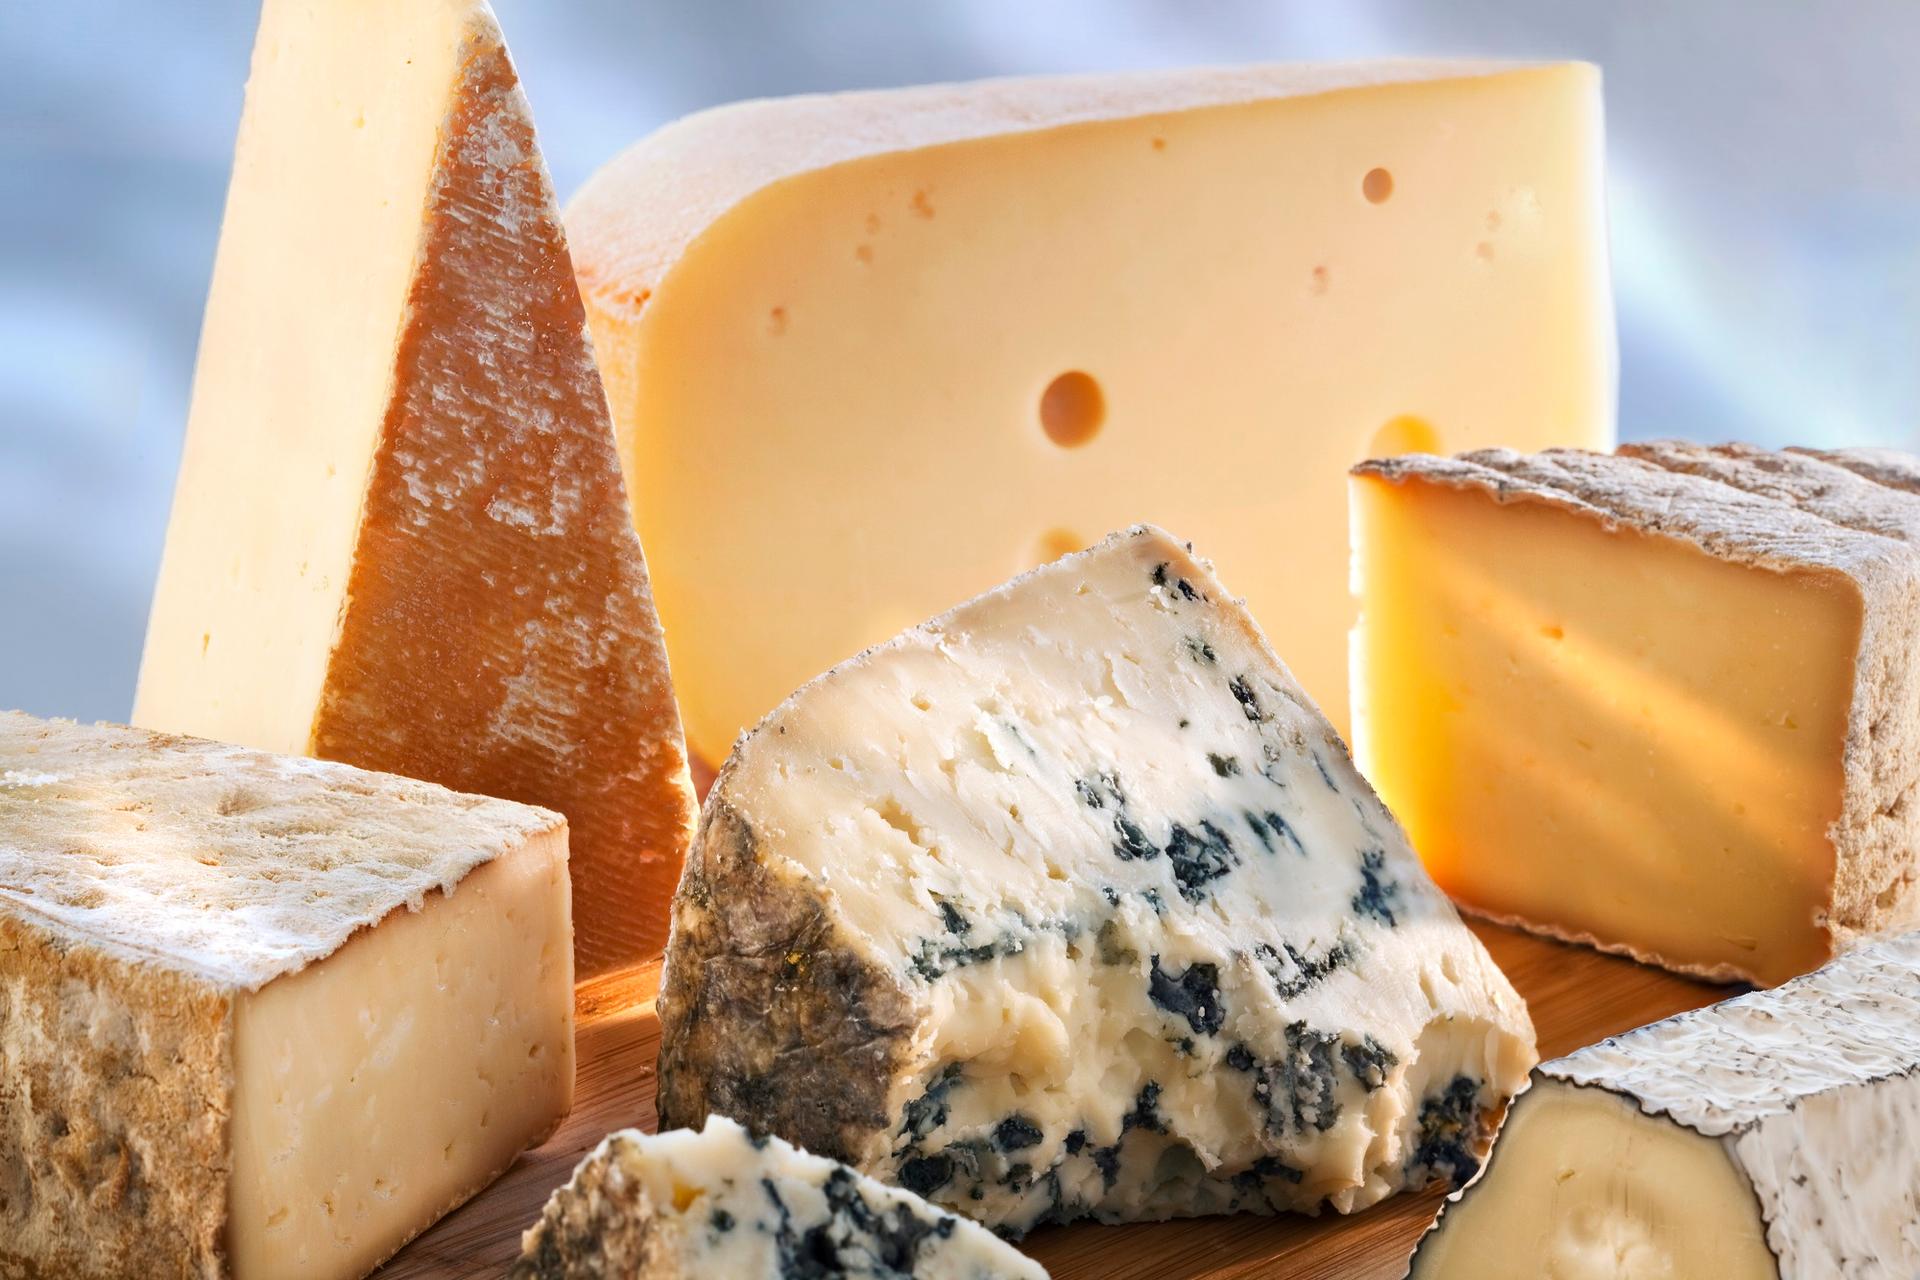 Quebec cheese